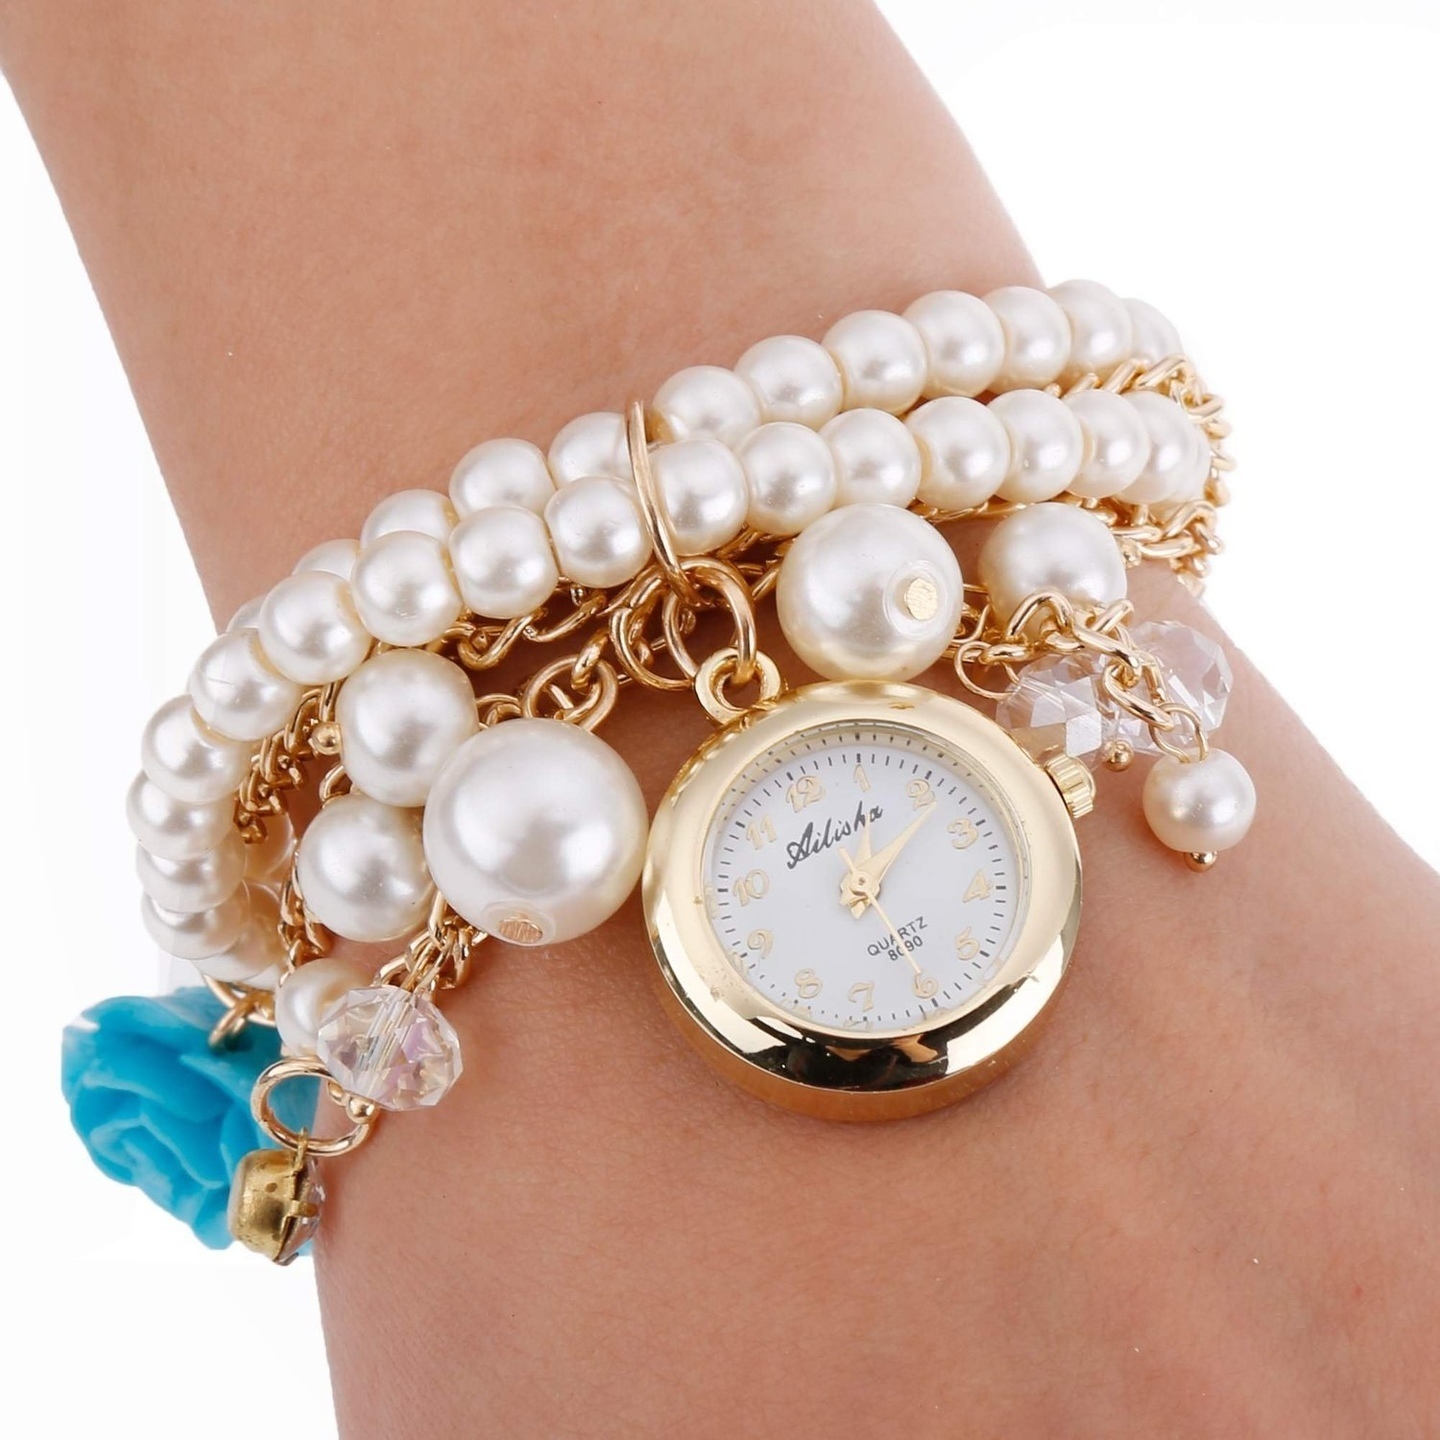 Ashiana stylish multi layer charm pearl bracelet style watch with Blue rose